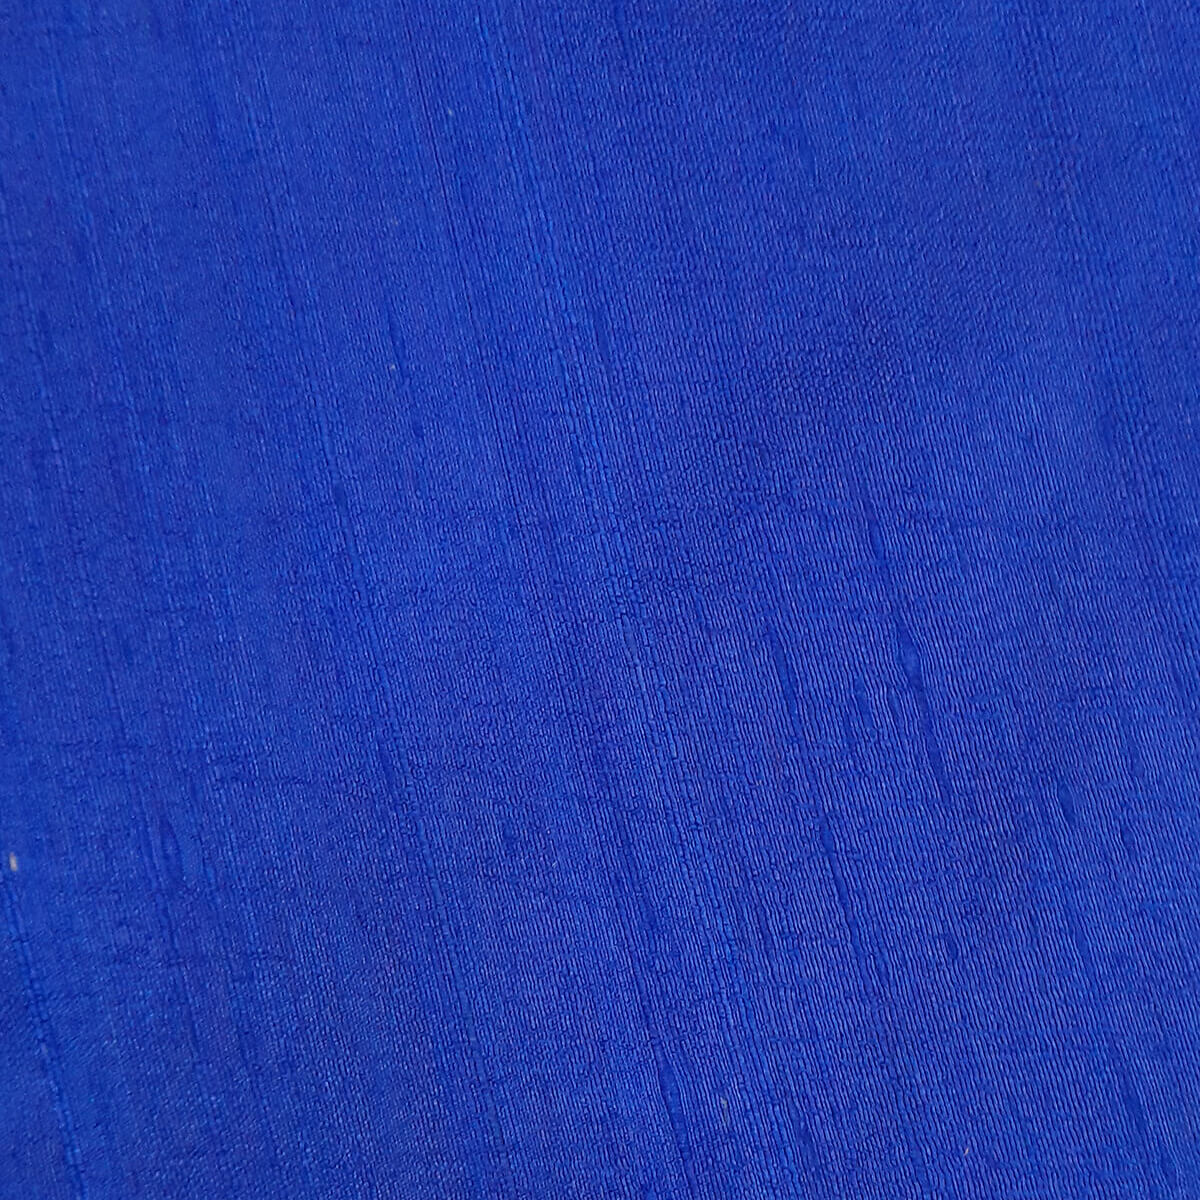 Shiny Blue Color Plain Premium Dupion Silk Fabric (Width 44 Inches) –  Fabric Pandit